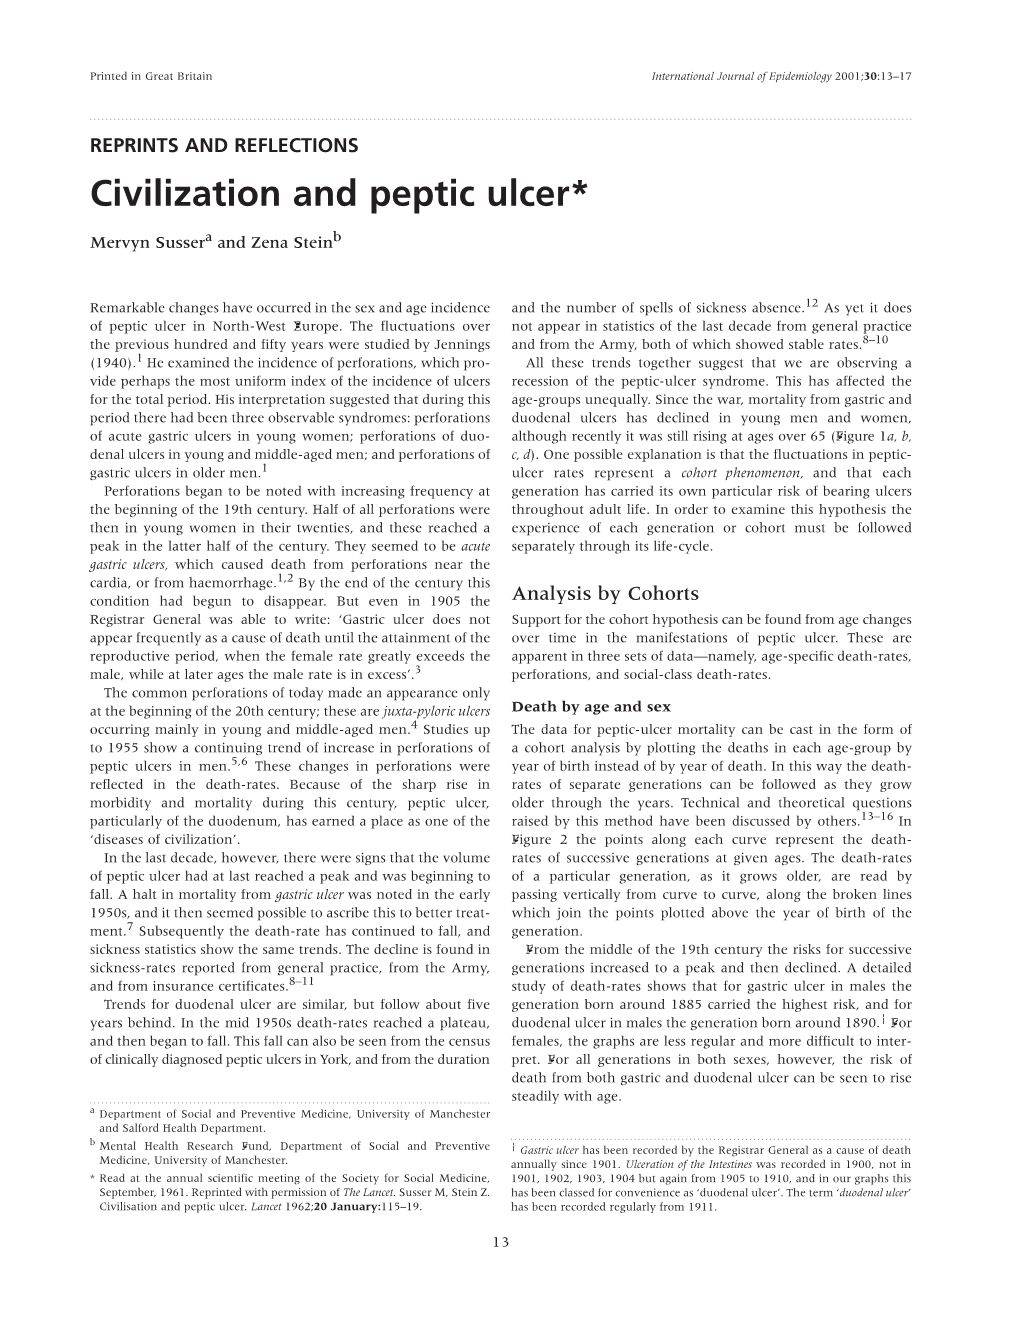 Civilization and Peptic Ulcer*